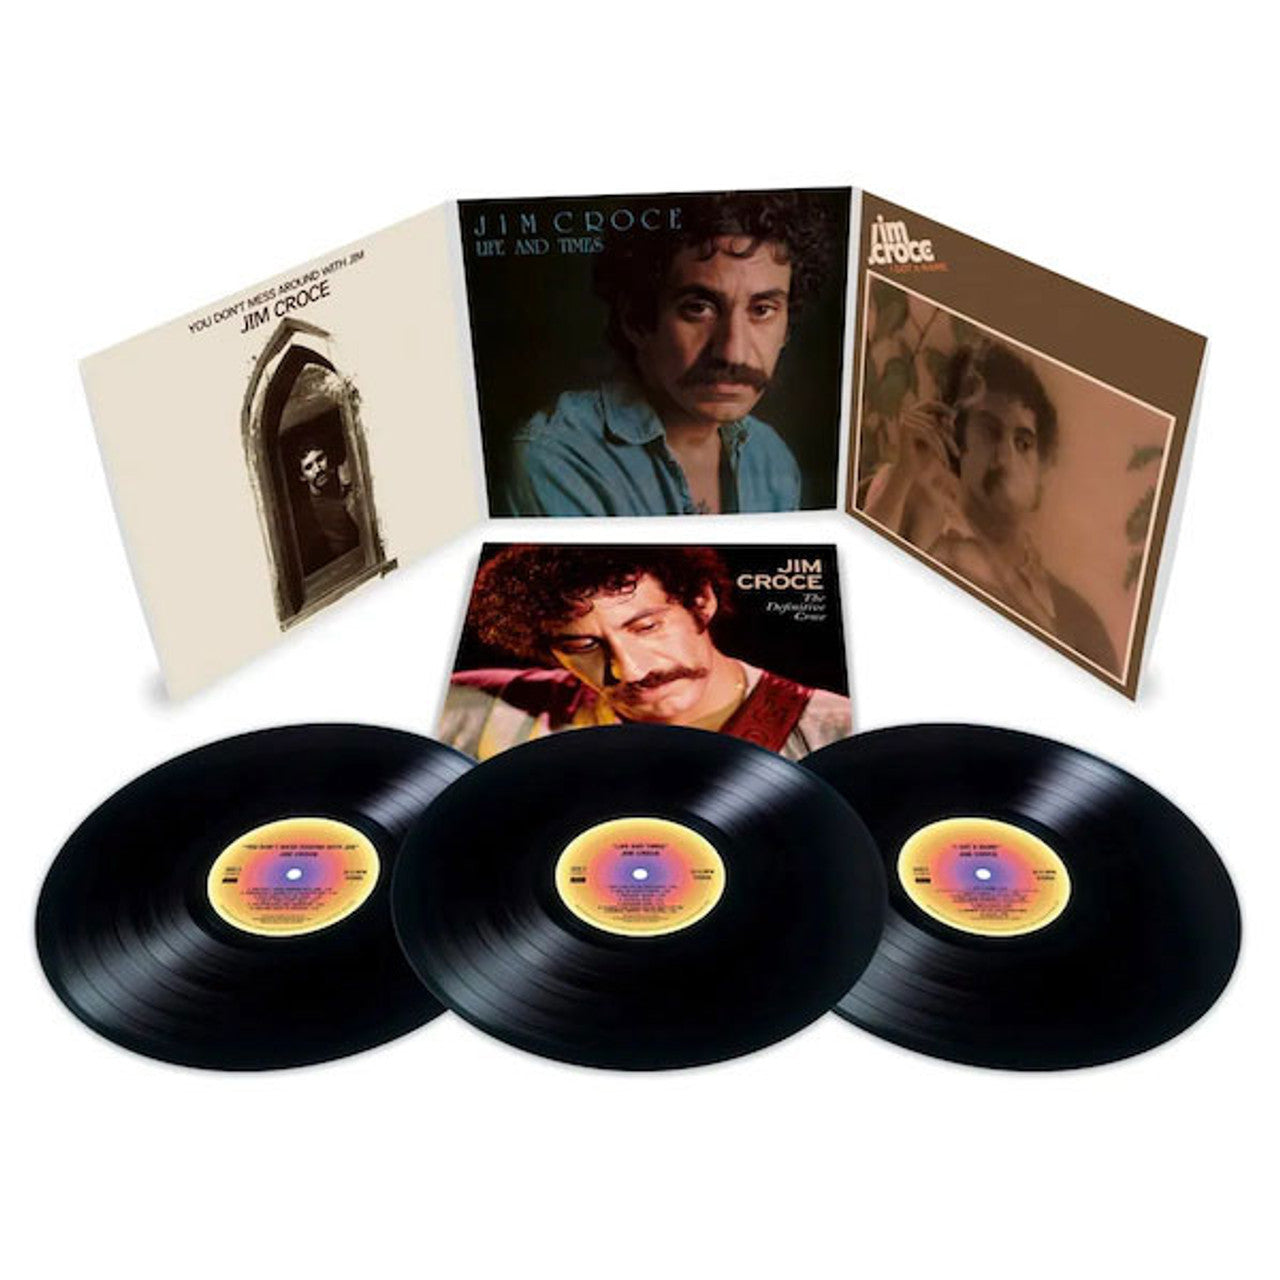 Jim Croce - The Definitive Croce [3LP] Collection From 1972-1973, Triple Gatefold (import)